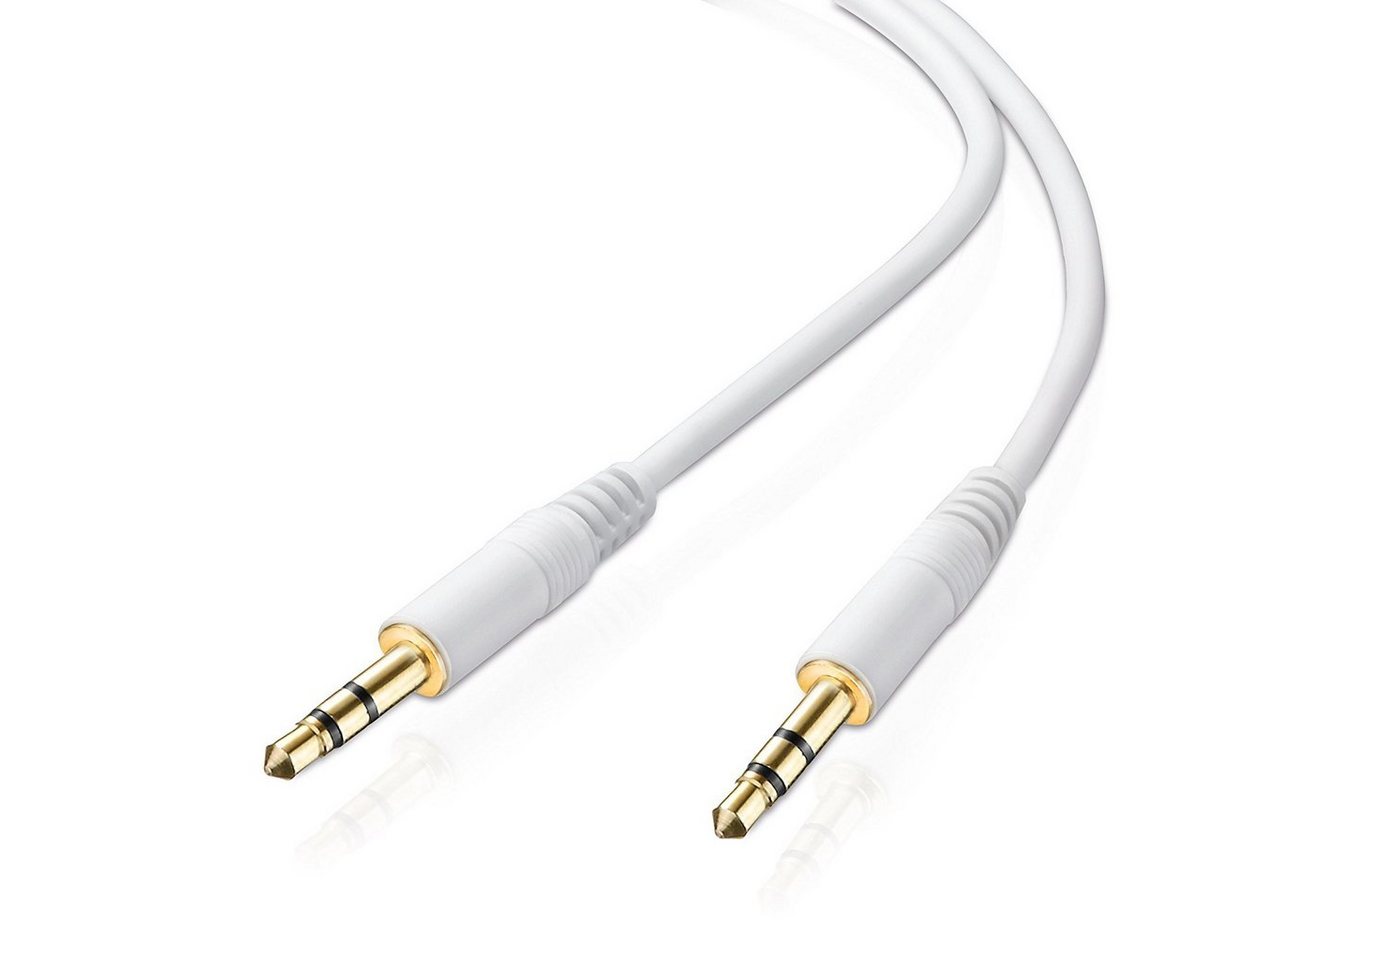 adaptare adaptare 1 m Stereo-Aux-Kabel 2-mal 3,5-mm-Stecker Klinke vergoldet Audio-Kabel von adaptare